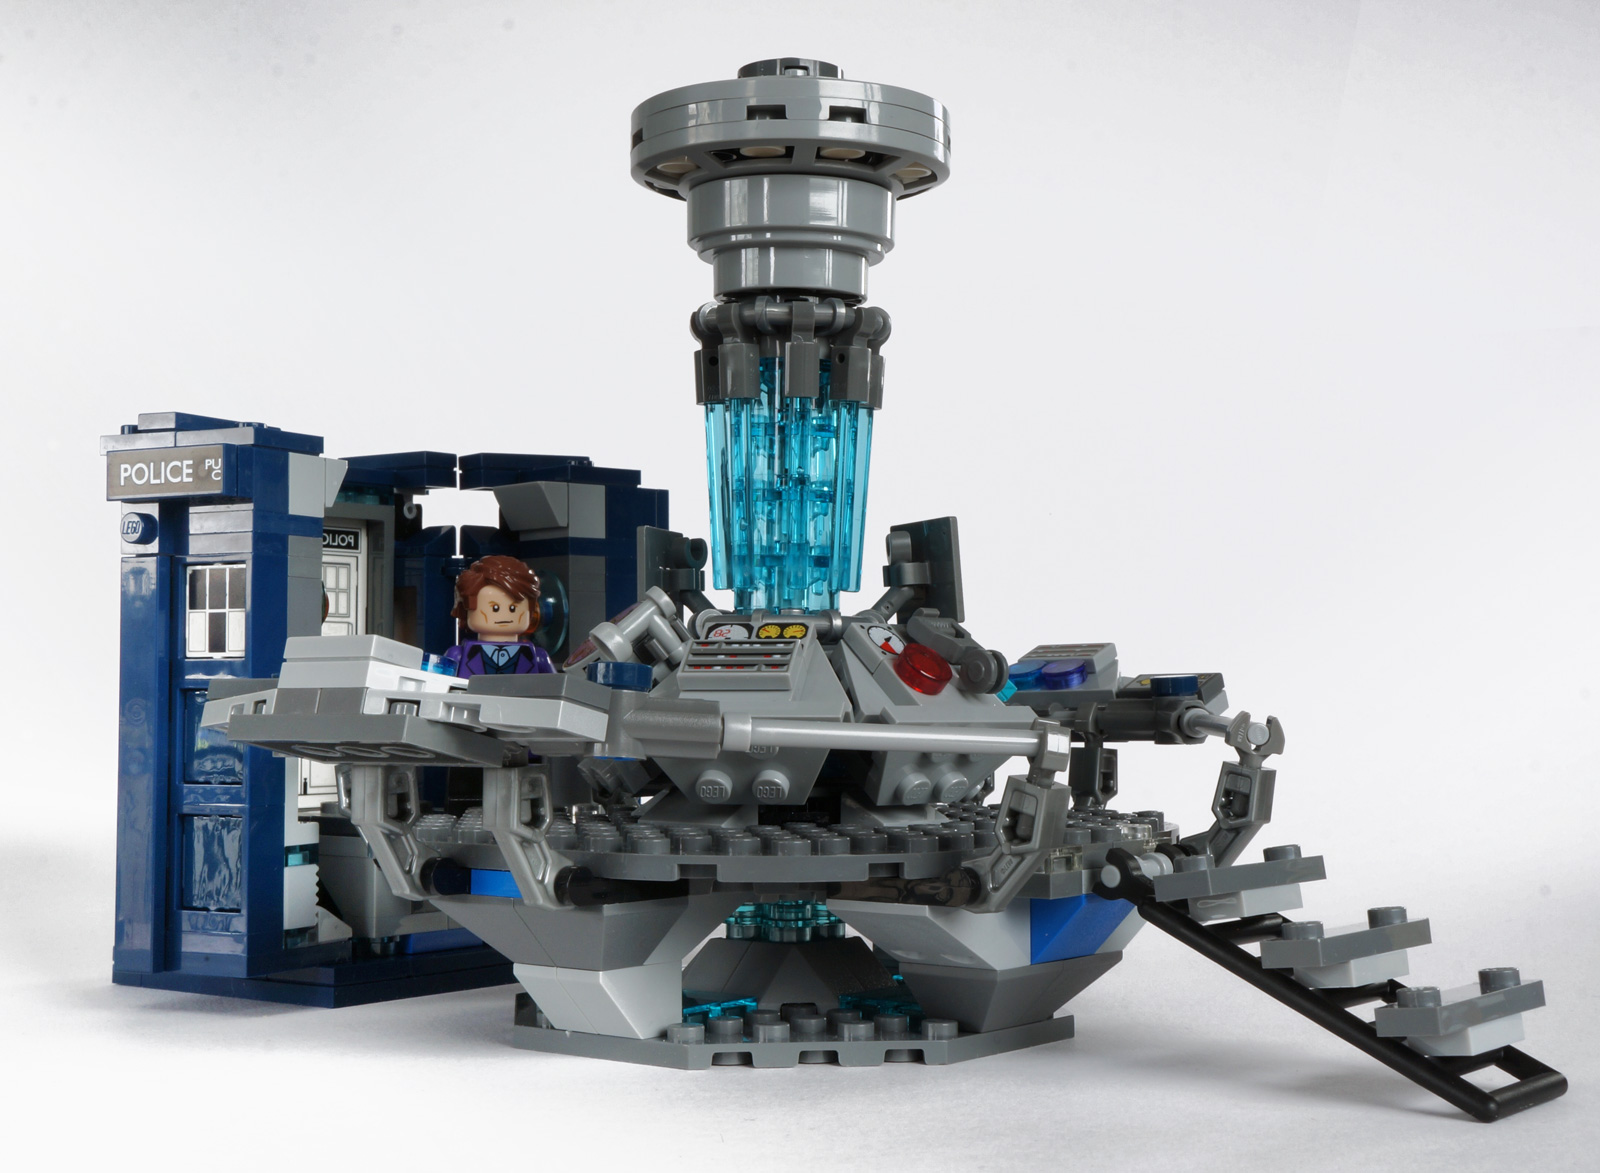 LEGO IDEAS - Doctor Who LEGO sets